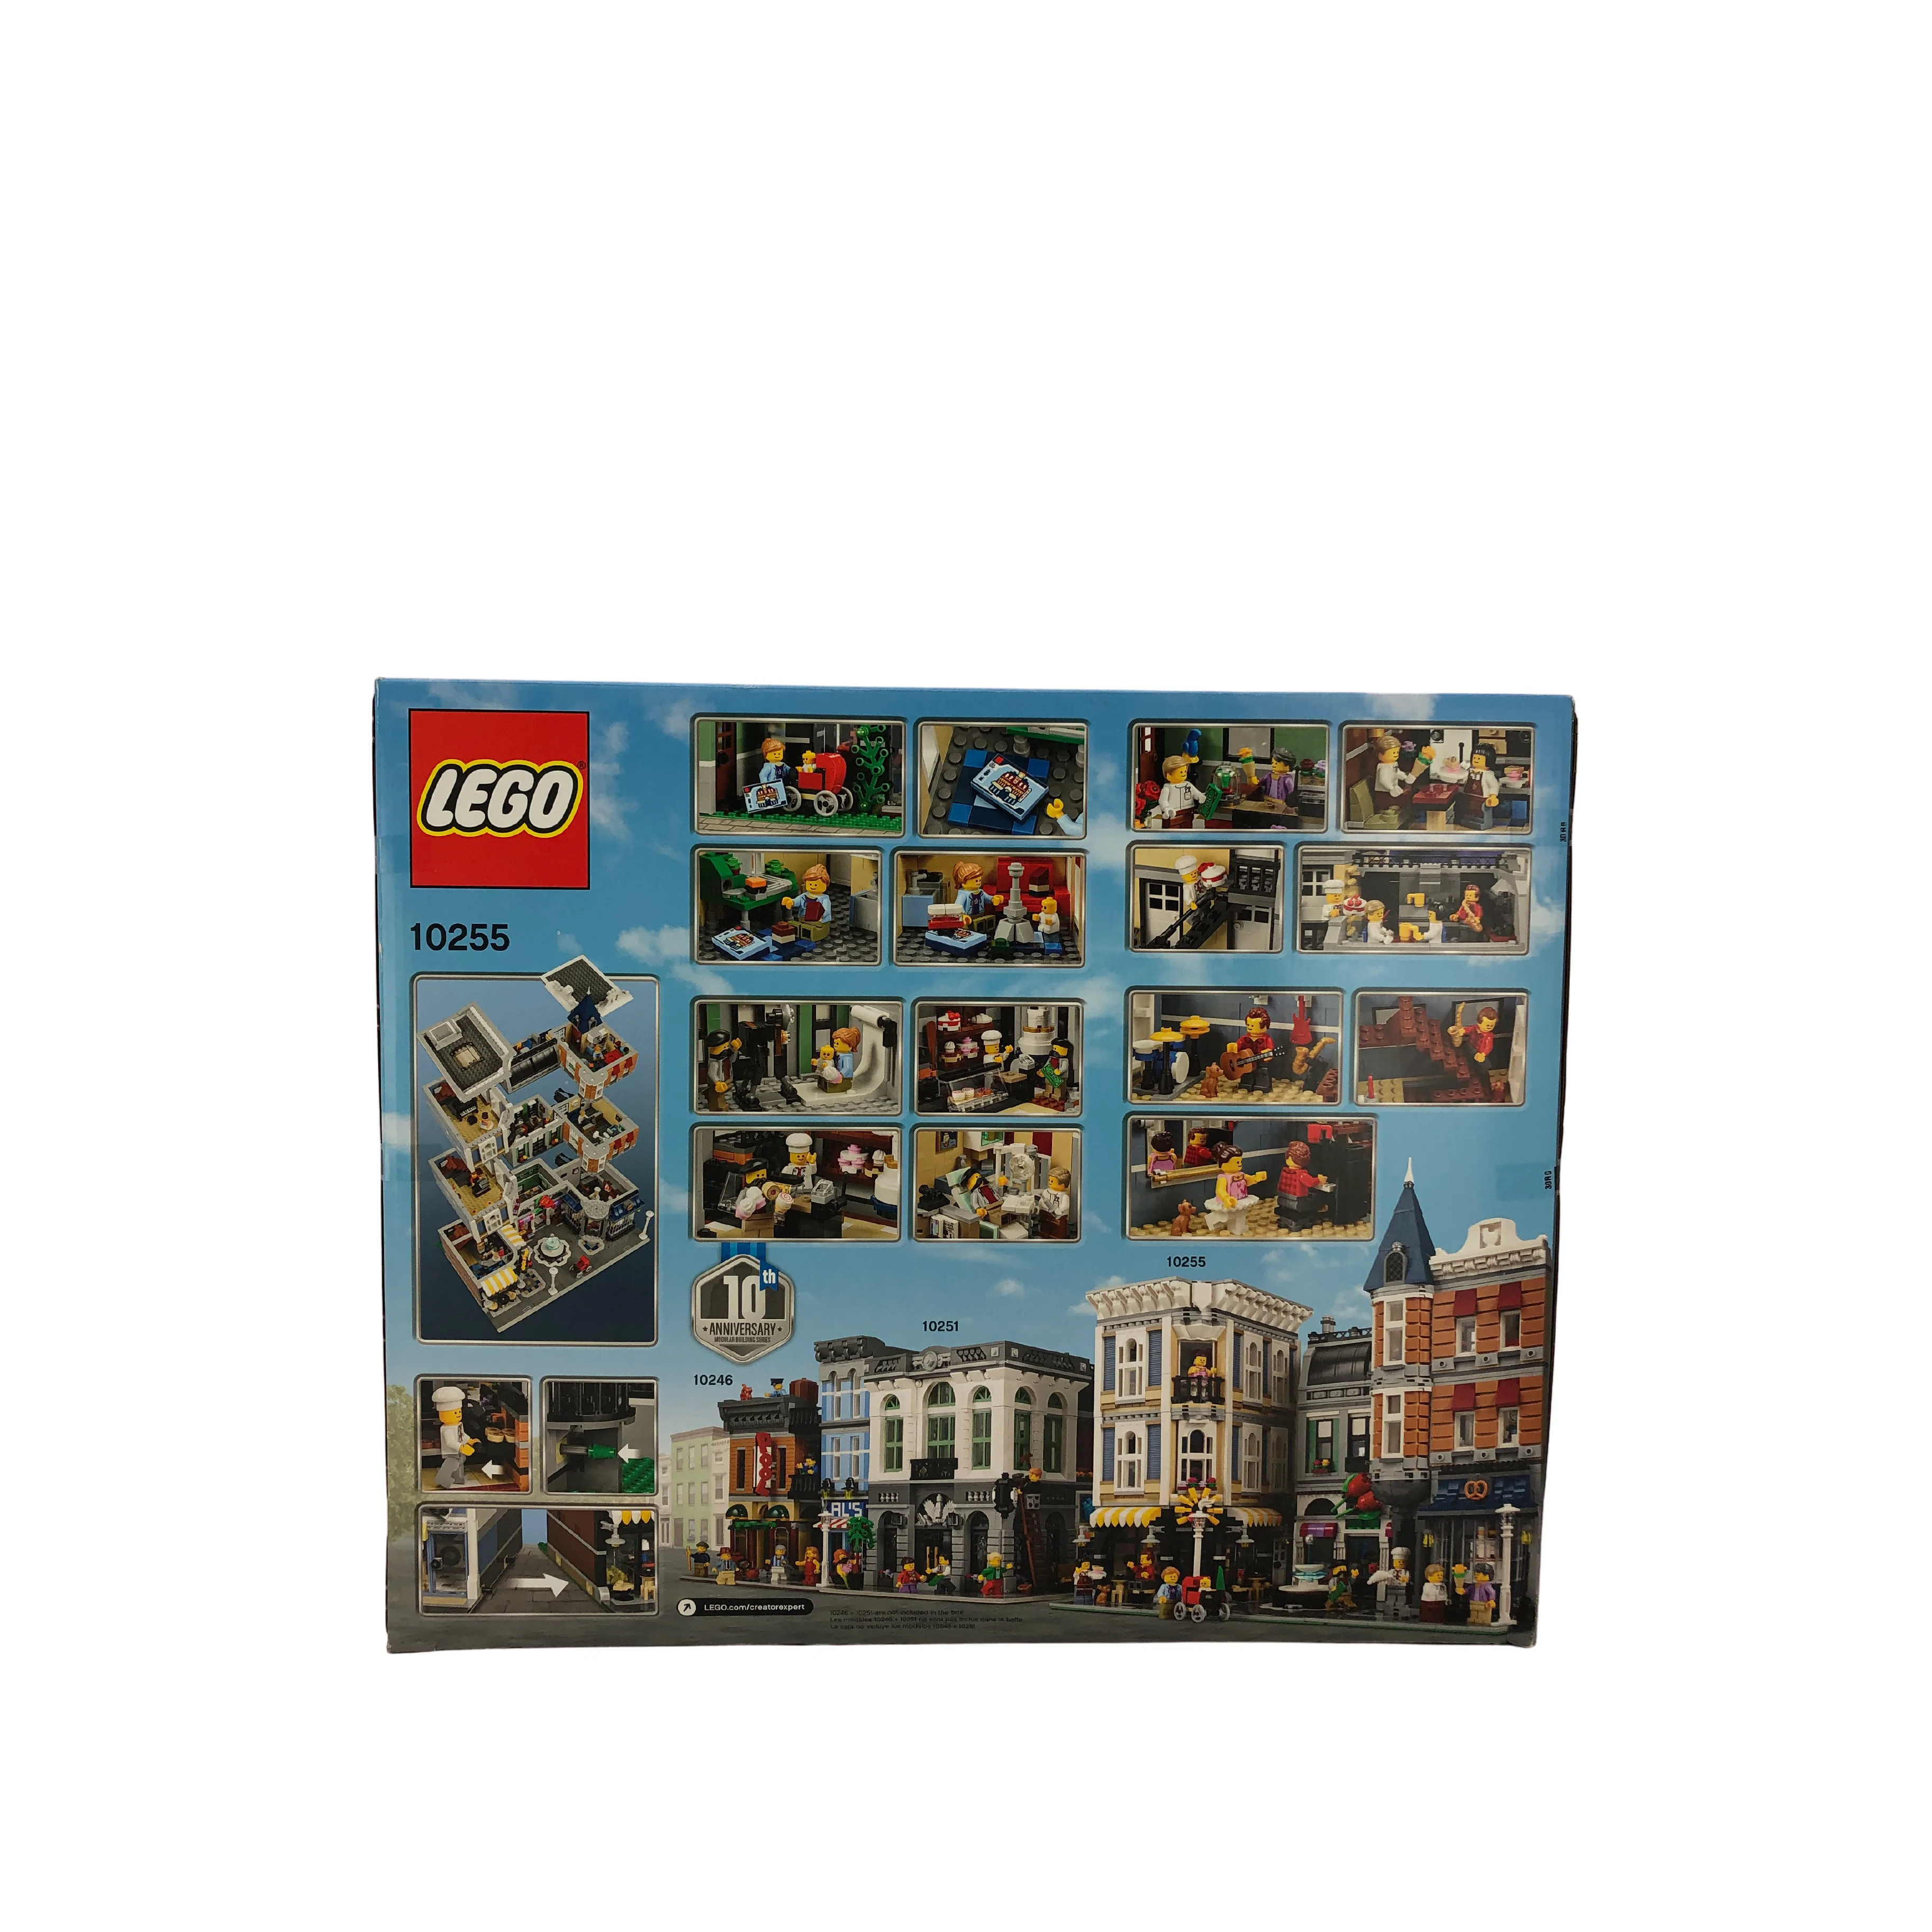 LEGO Creator Assembly Square Building Set / Expert Level / 10255 / 4002 Pieces **DEALS**